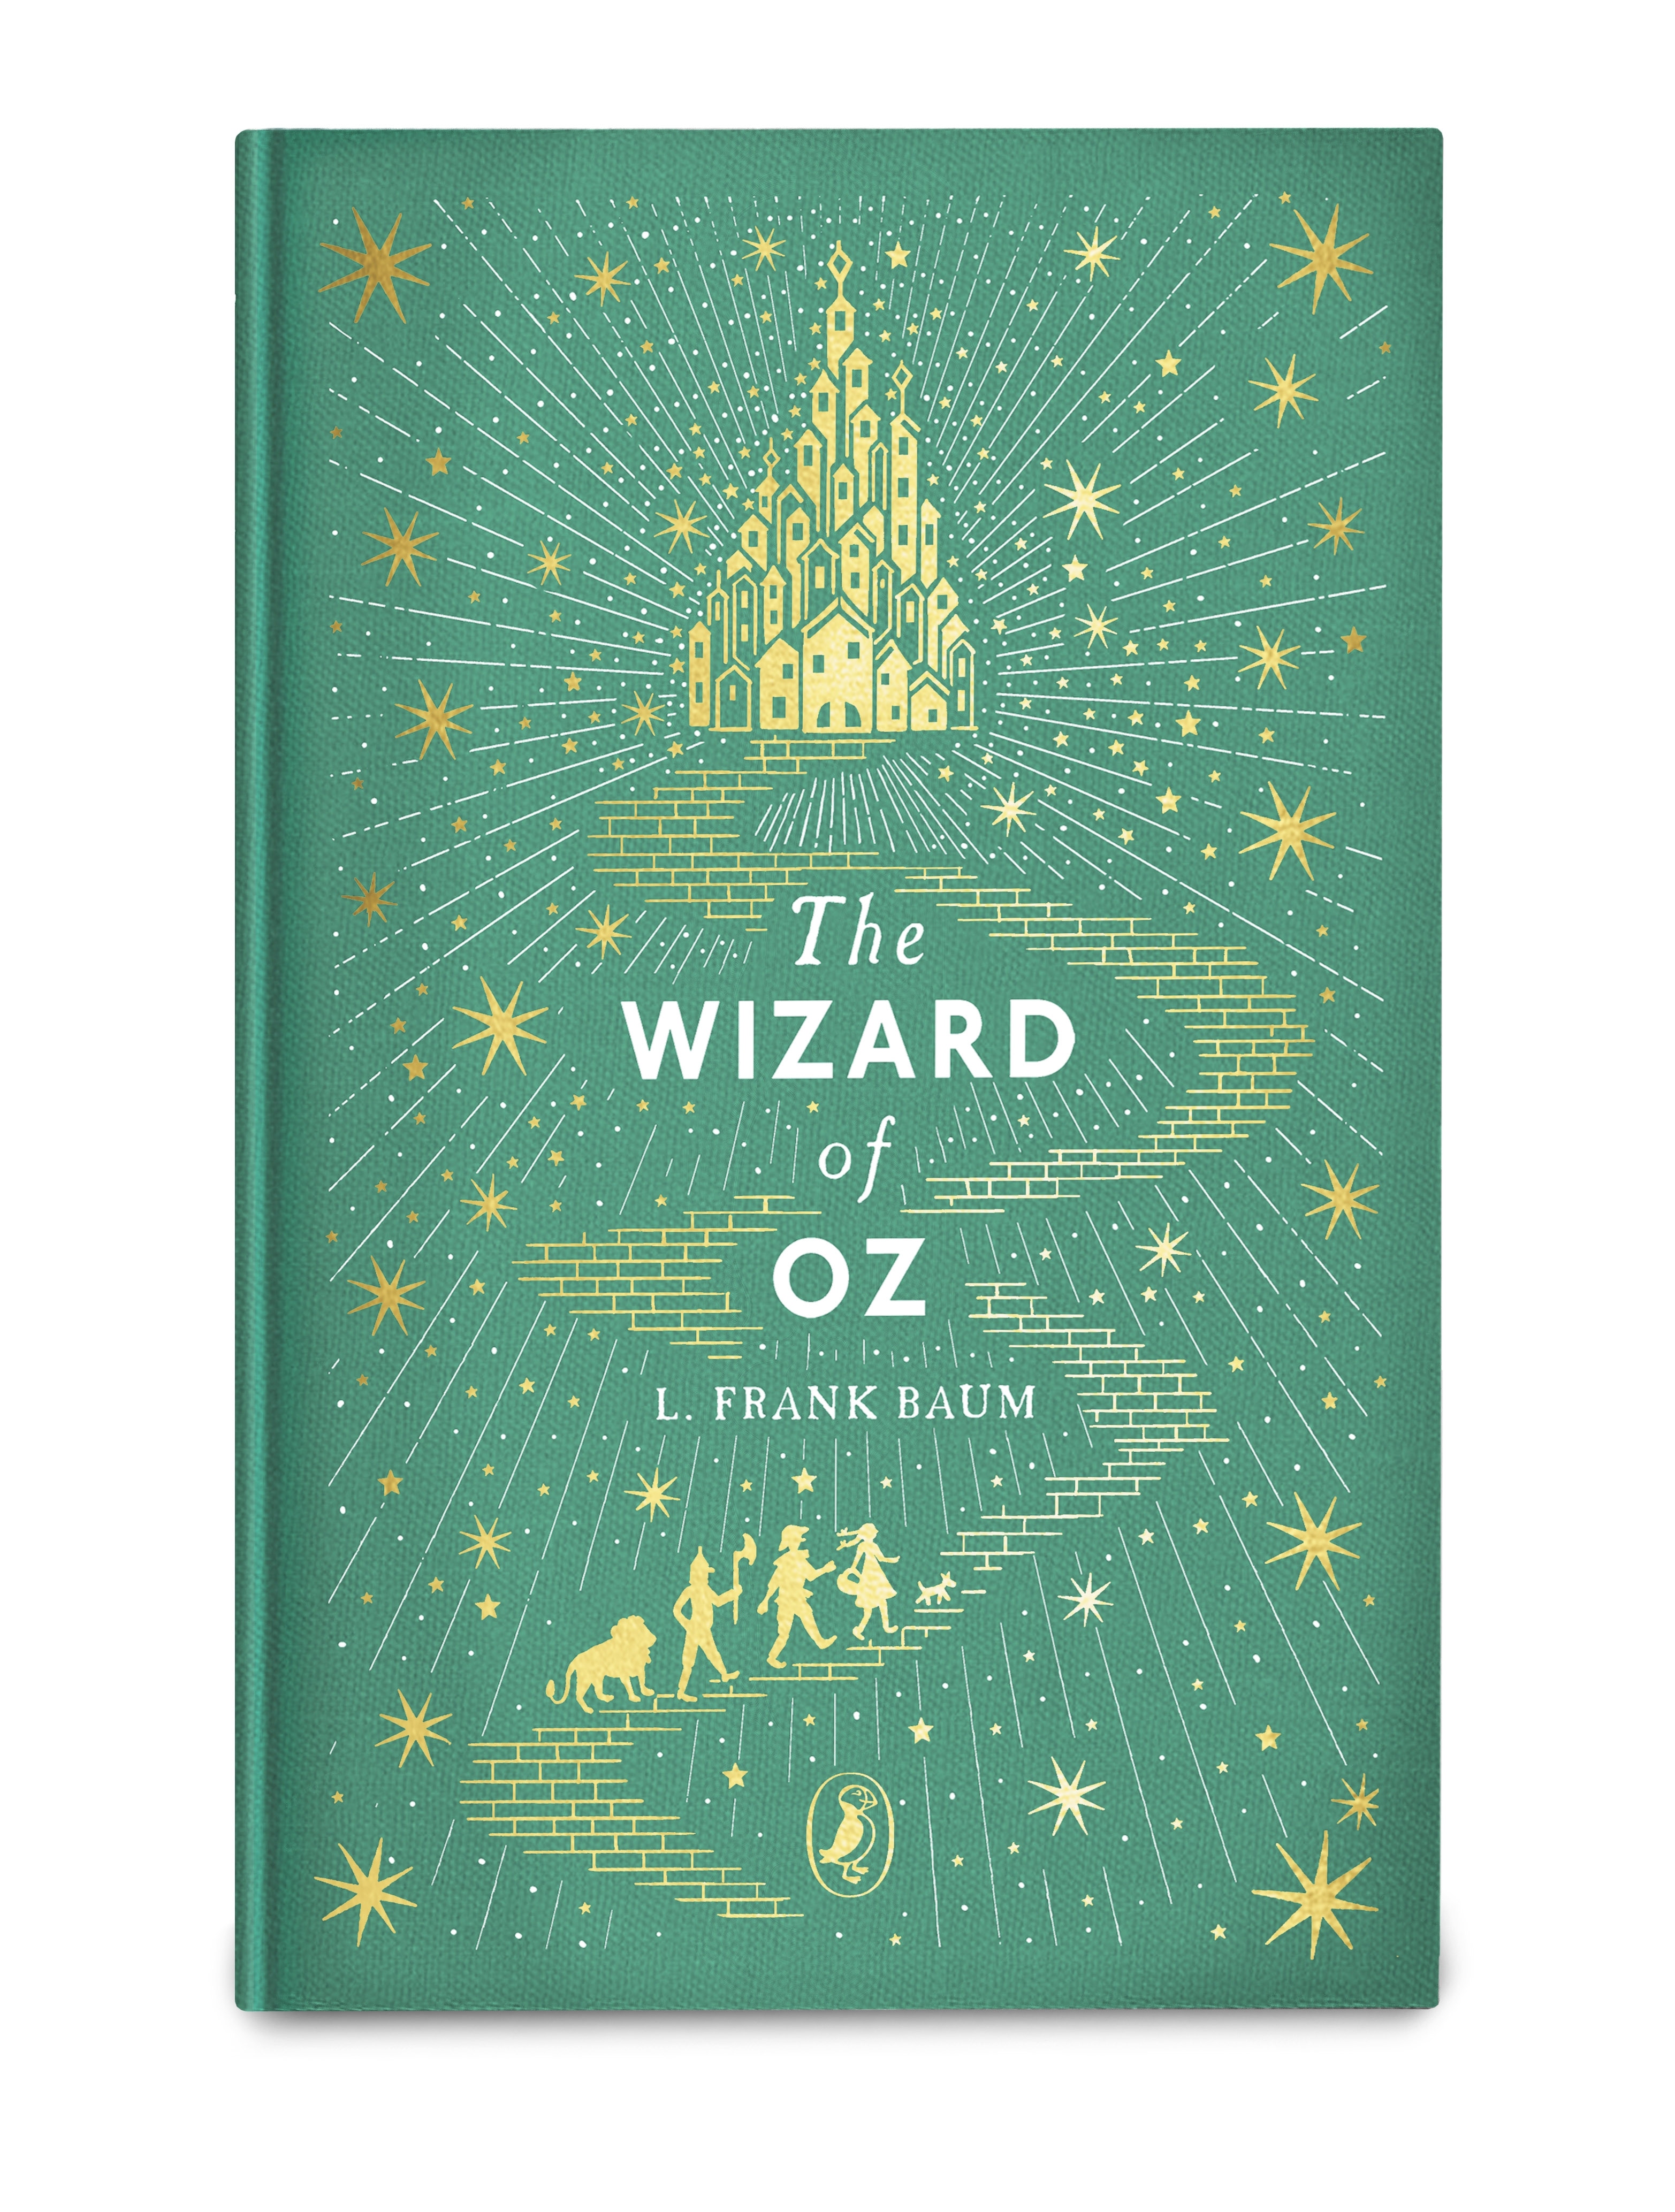 Book “The Wizard of Oz” by L. Frank Baum, Cornelia Funke — September 5, 2019